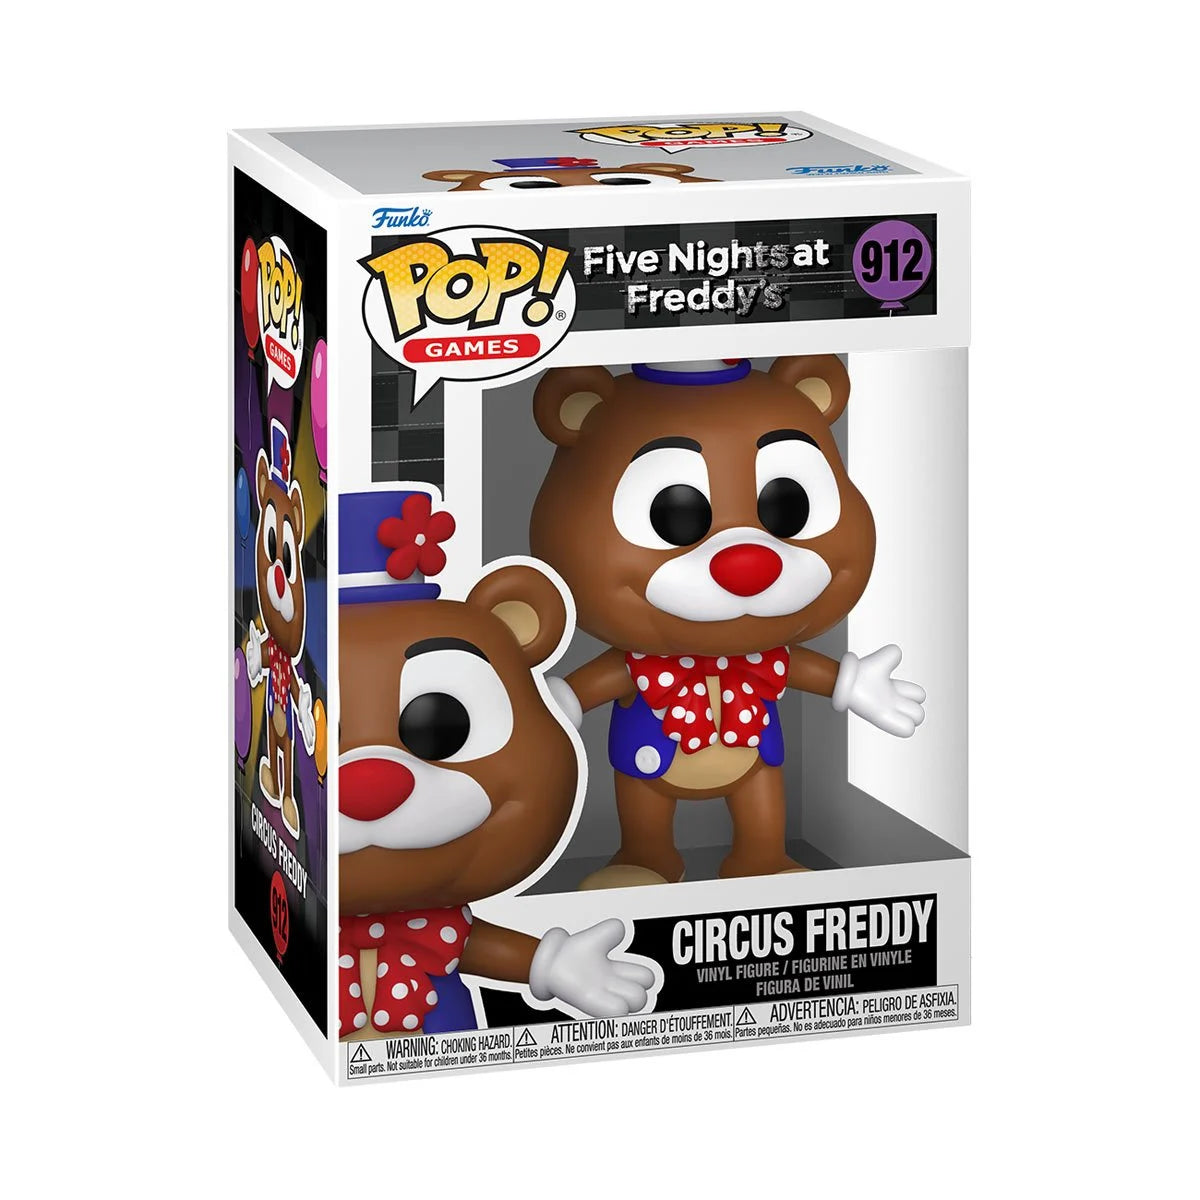 Circus Freddy Five Nights at Freddy's FUNKO POP! GAMES